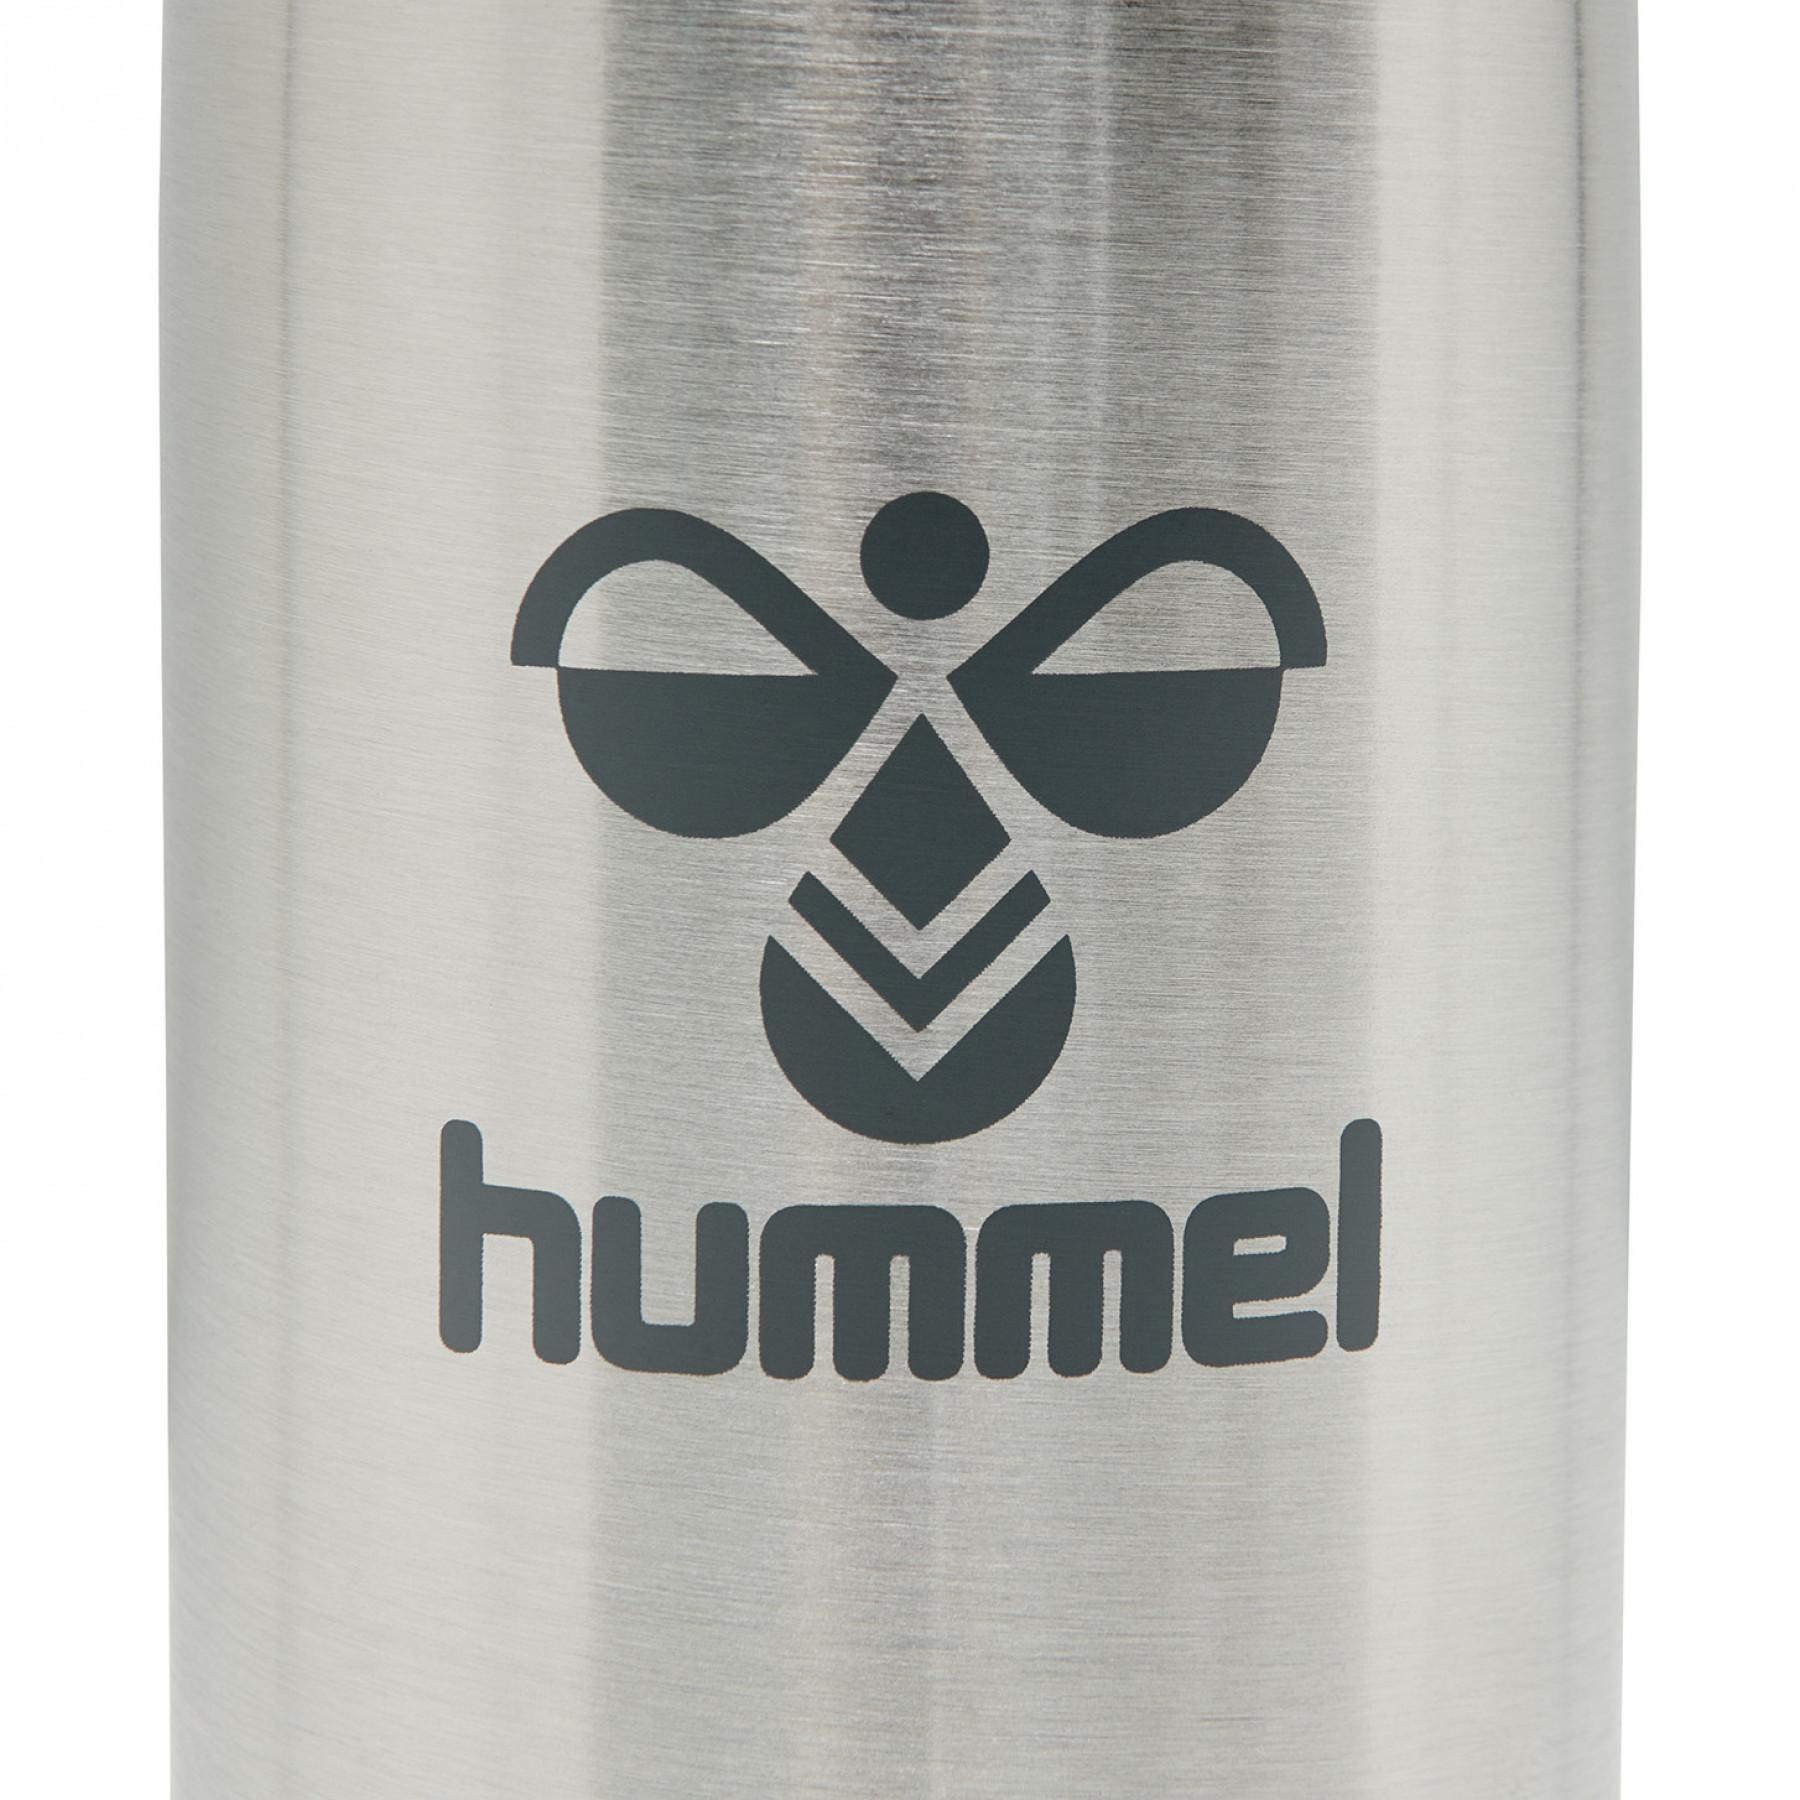 Flaska Hummel hmlINVENTUS